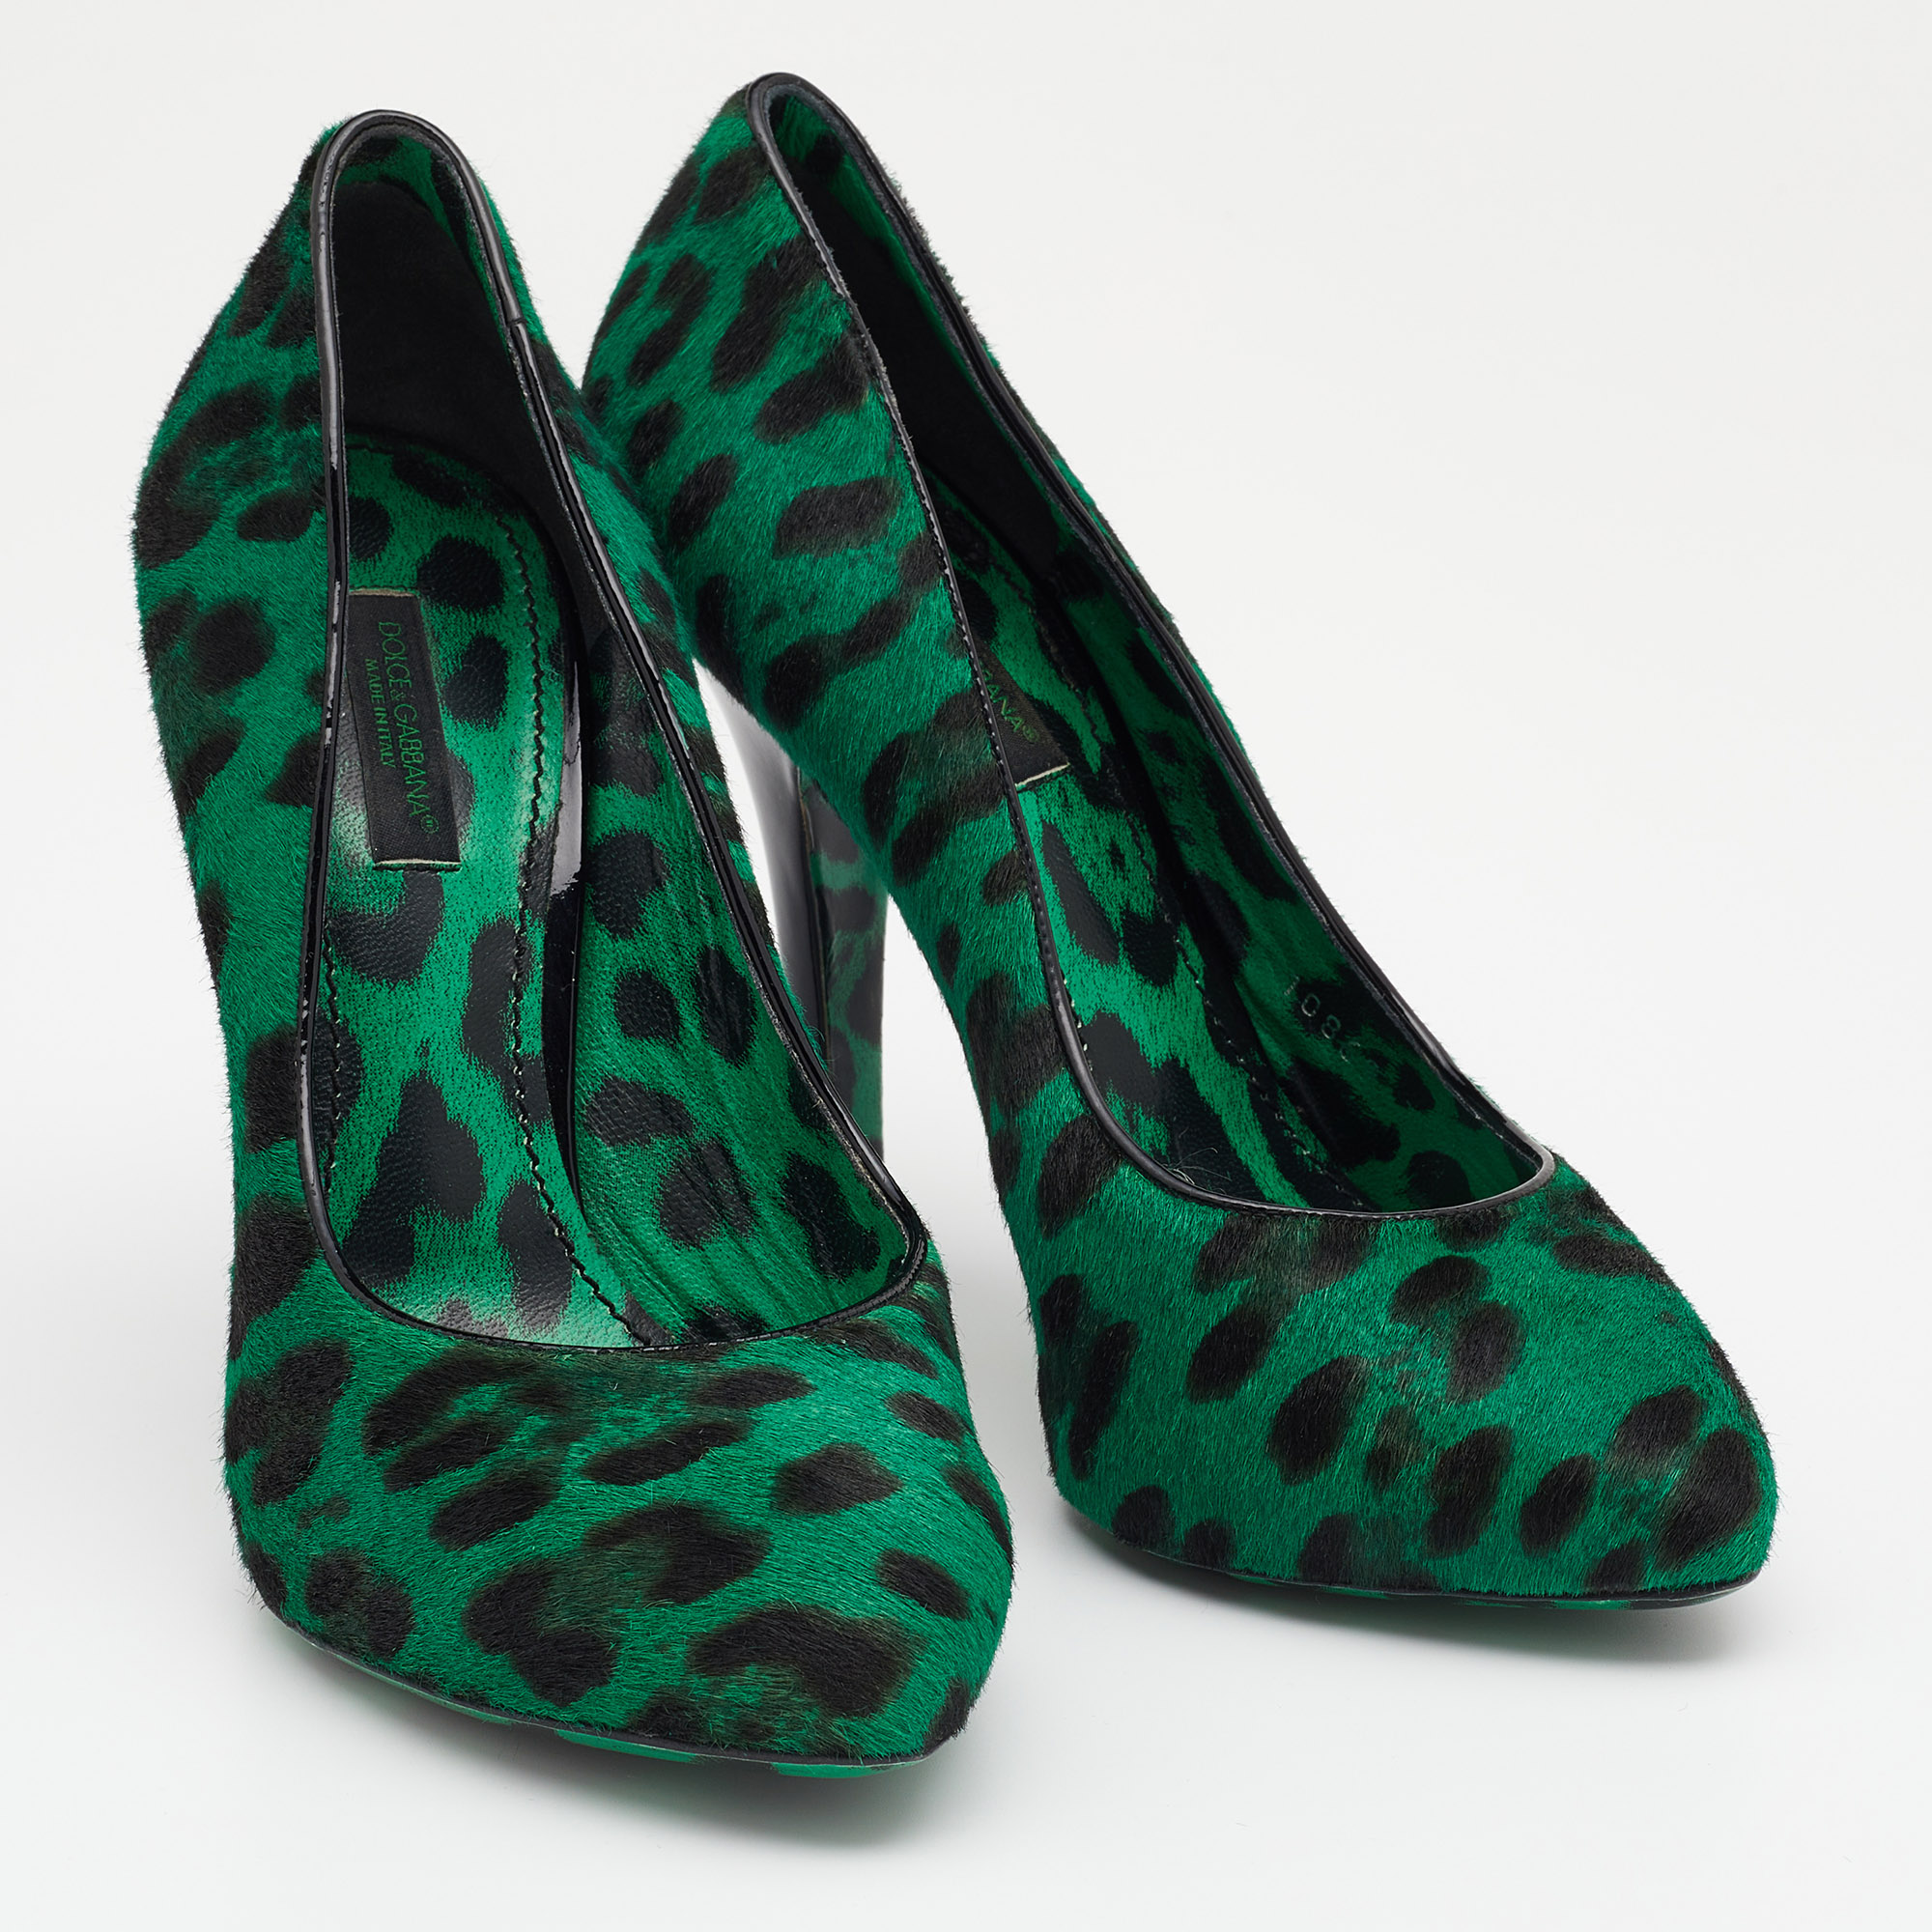 Dolce & Gabbana Green/Black Leopard Print Calf Hair Pumps Size 36.5